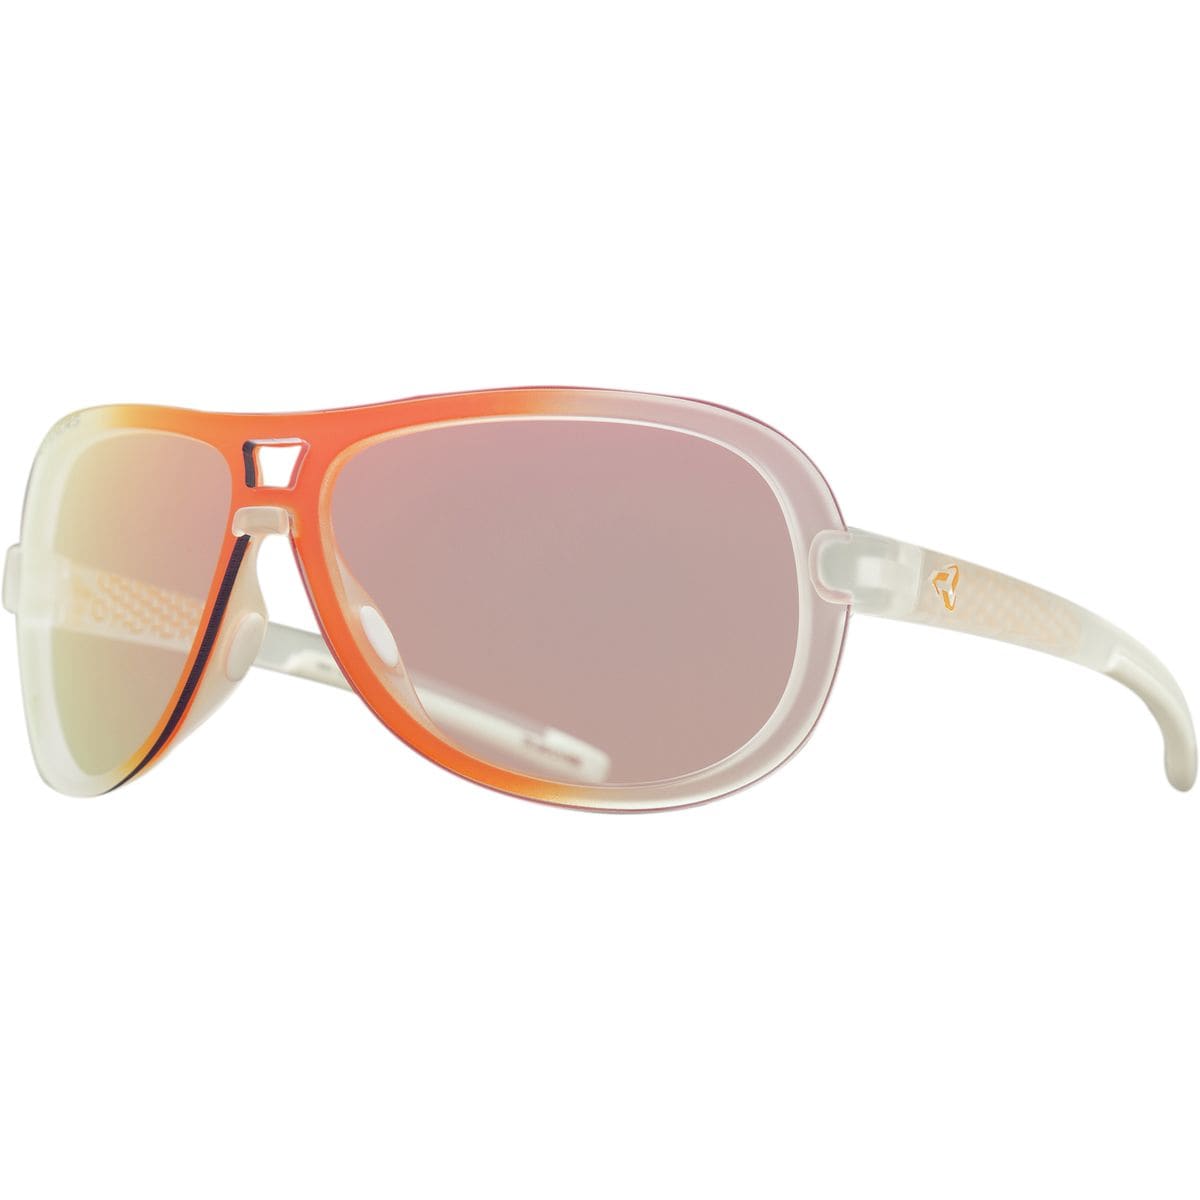 Ryders Eyewear Aero Photochromic Sunglasses Womens